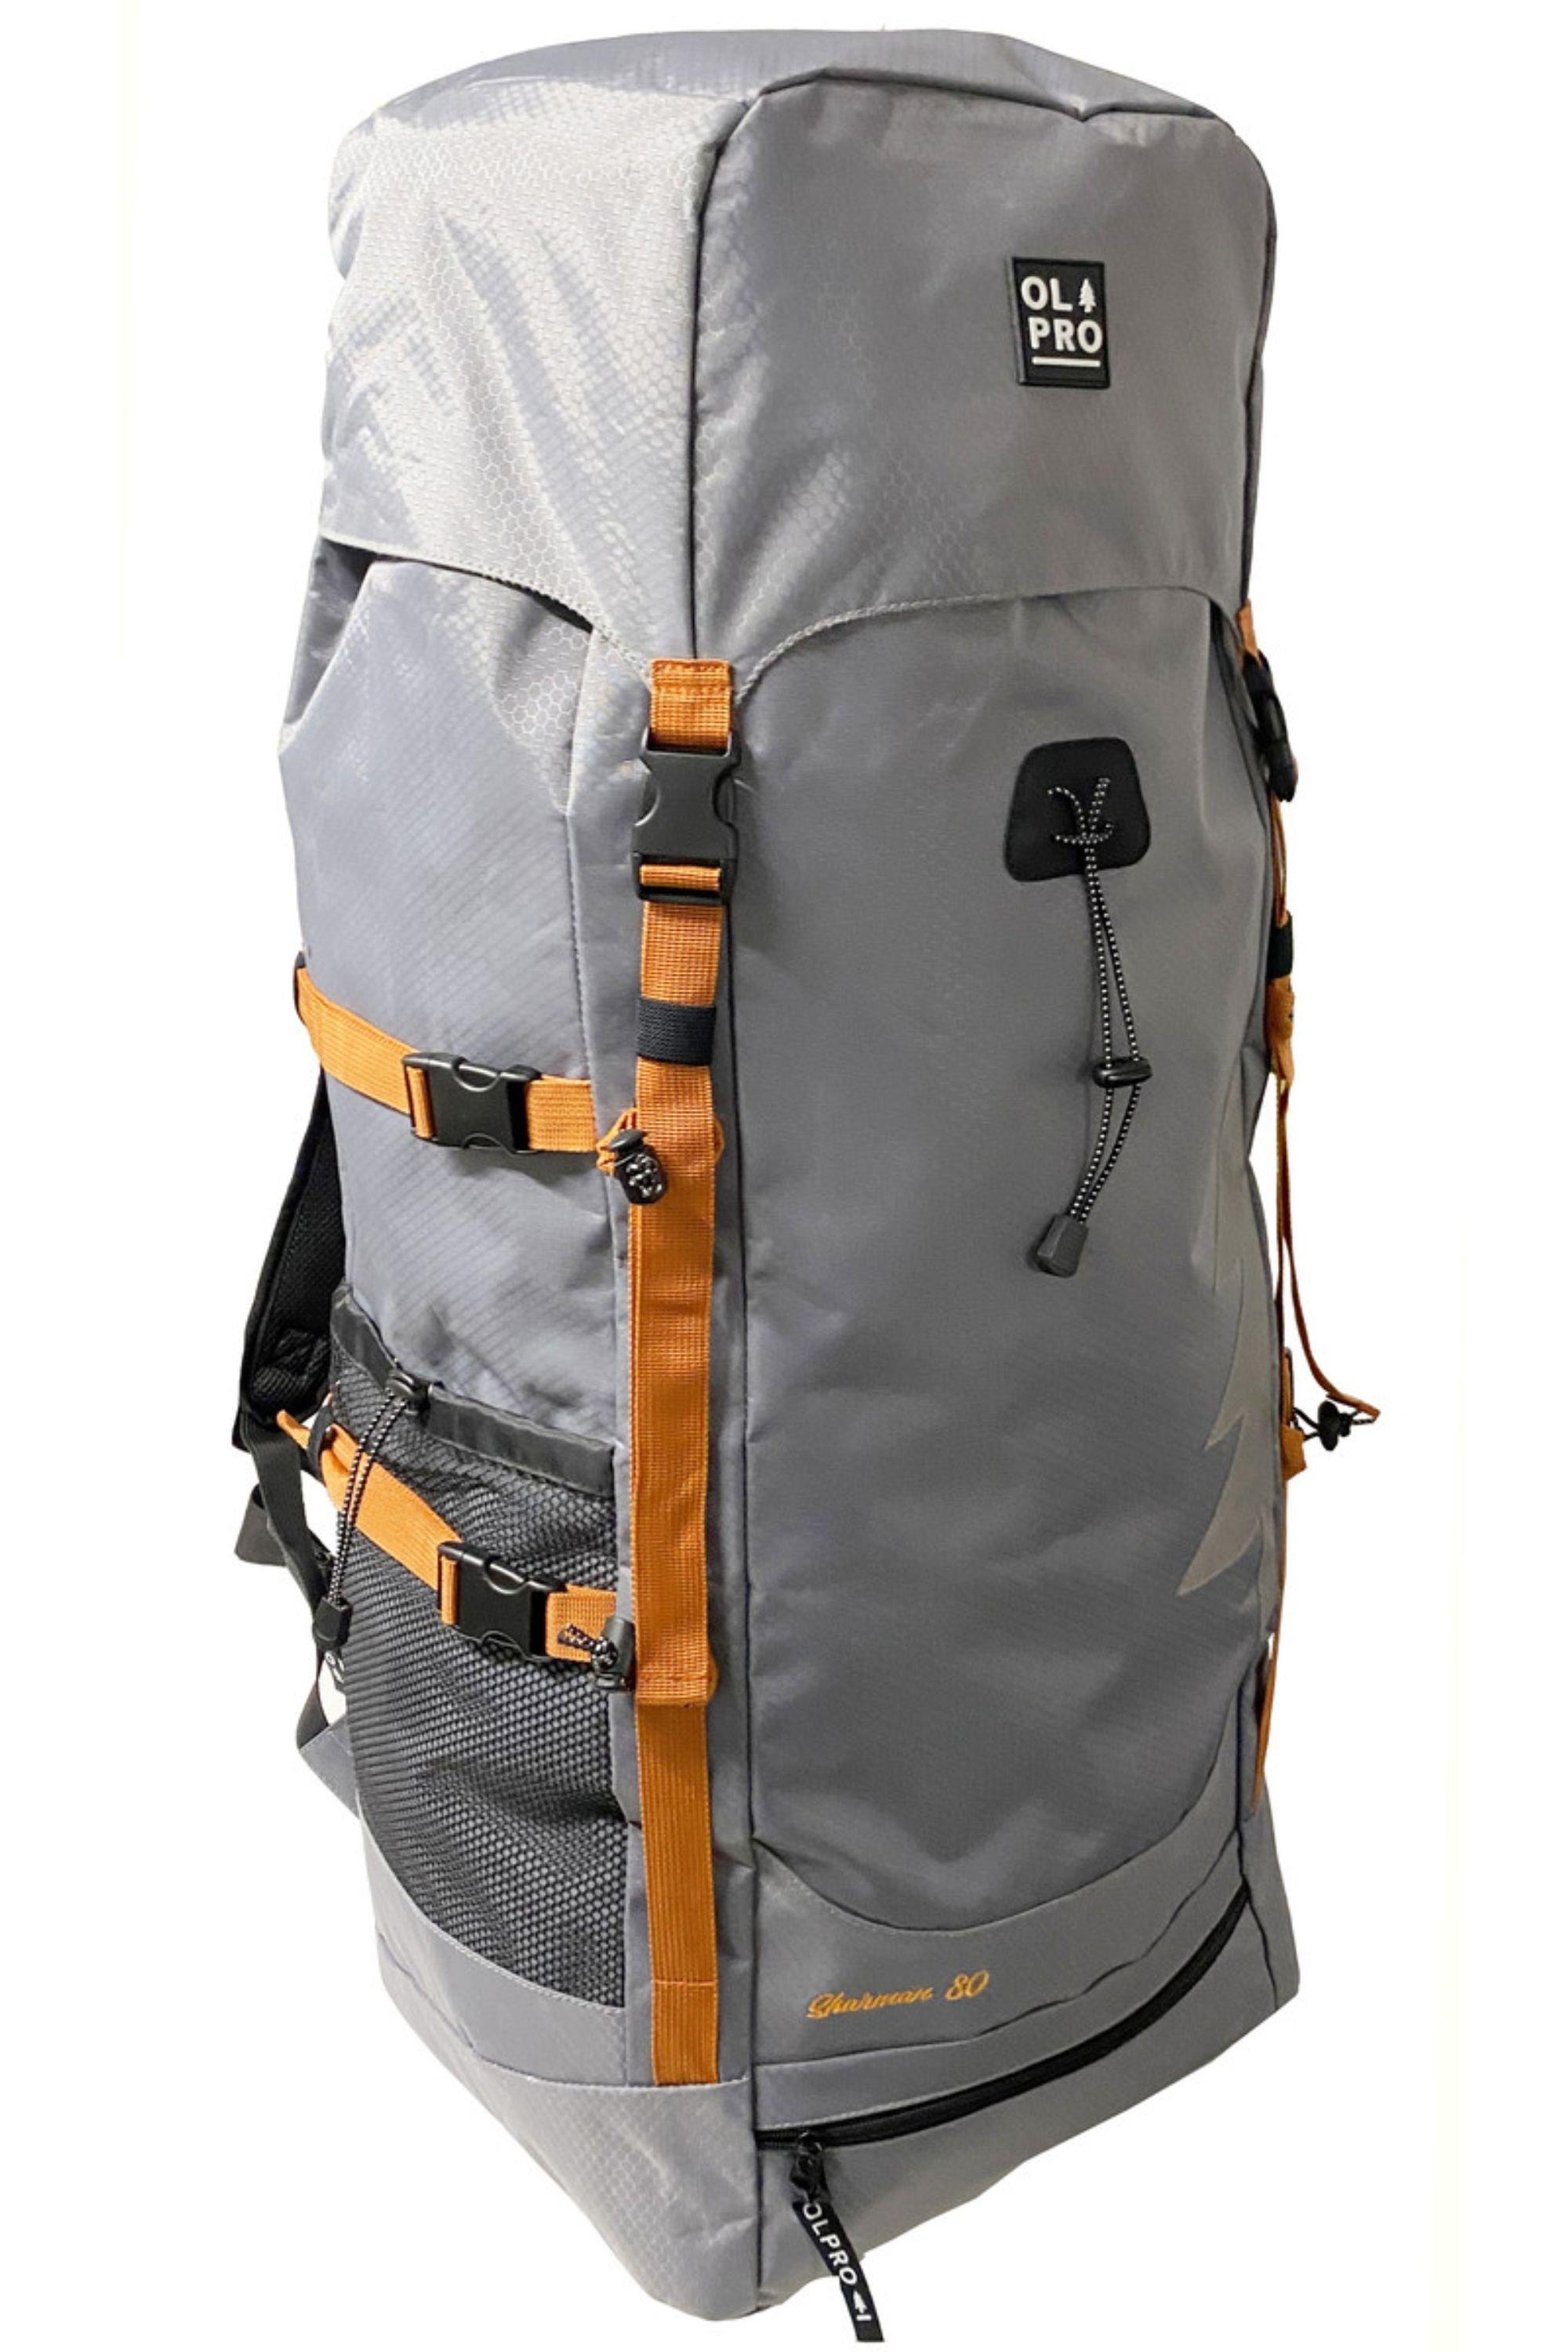 OLPRO 80L Rucksack Bag Grey